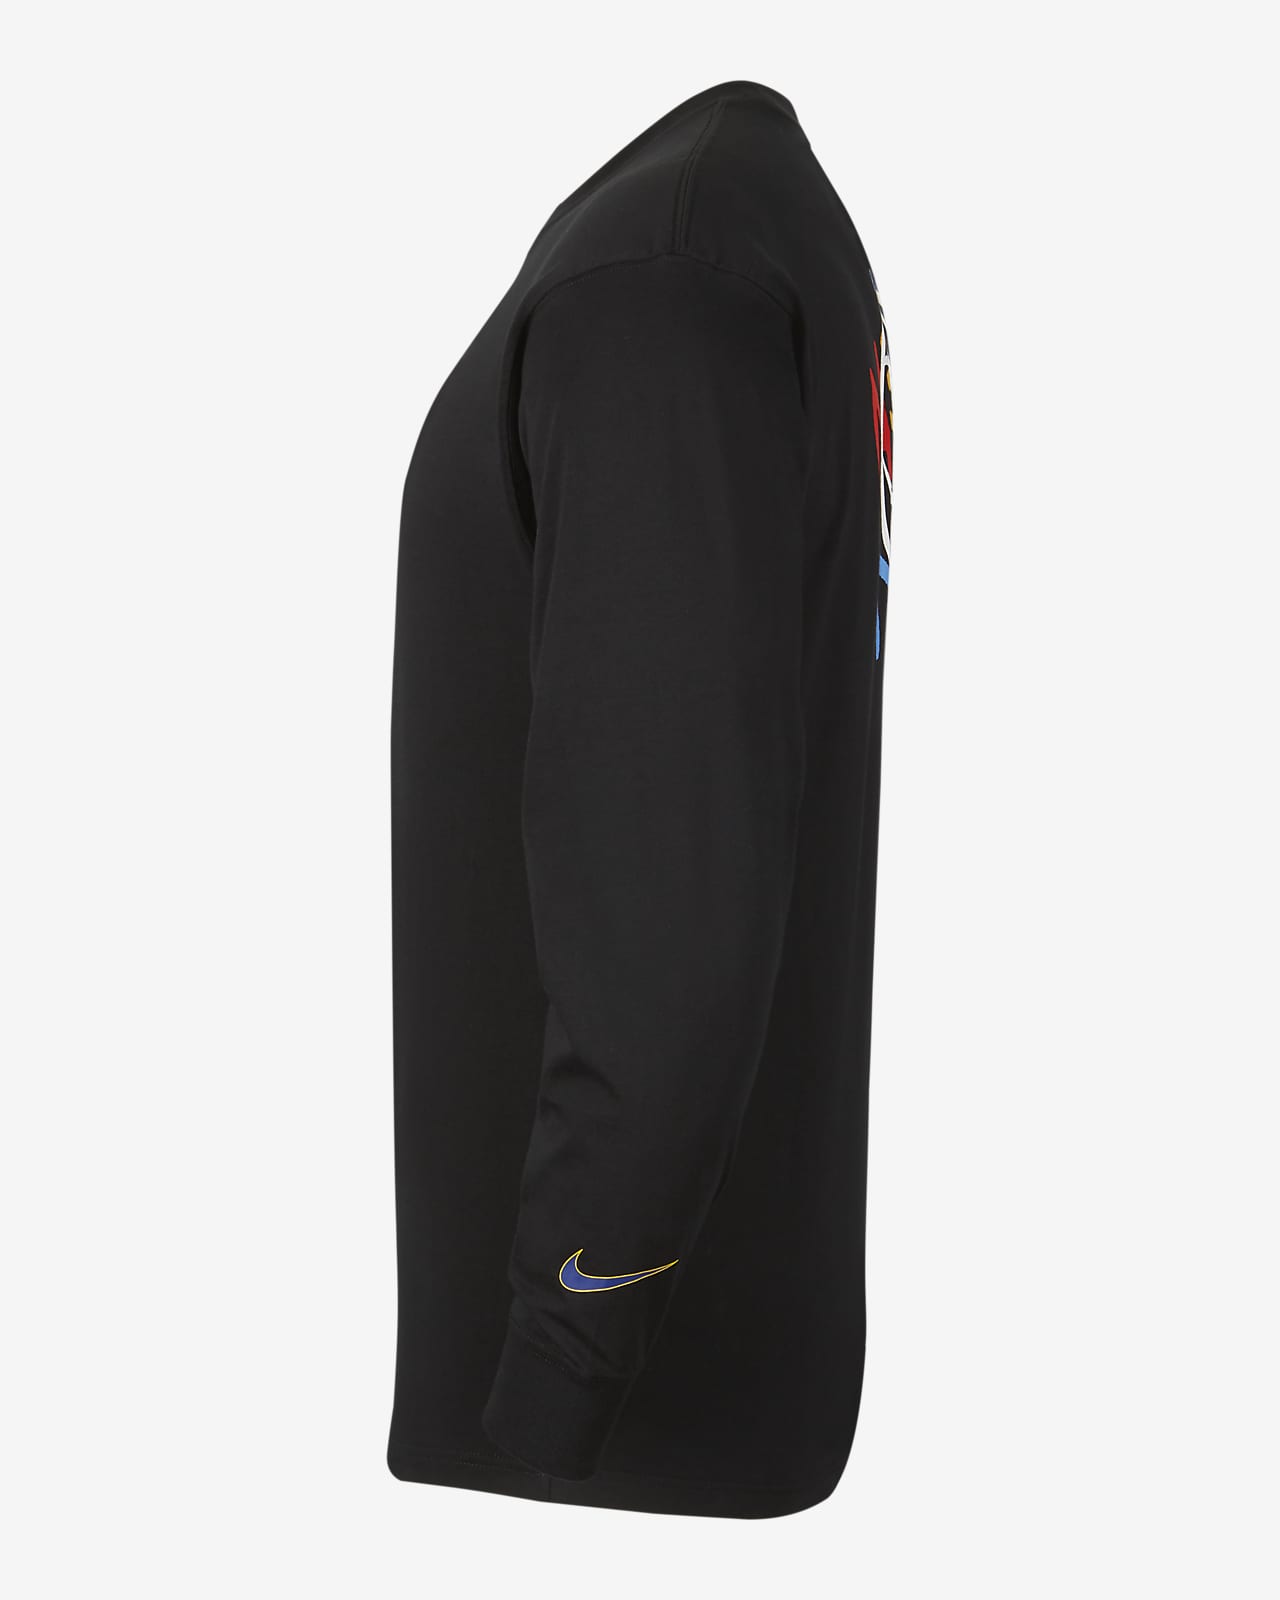 Shop Brooklyn Nets City Edition Men's Nike NBA Long-Sleeve T-Shirt